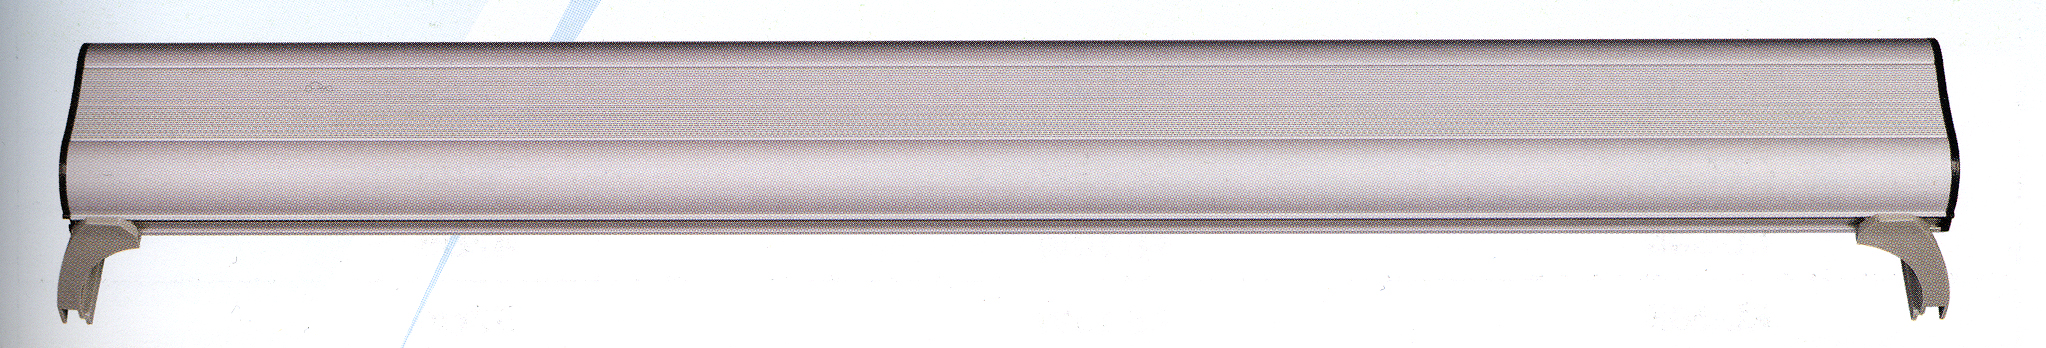 XILONG светильник T8 2х25Вт XL-100A, 96см